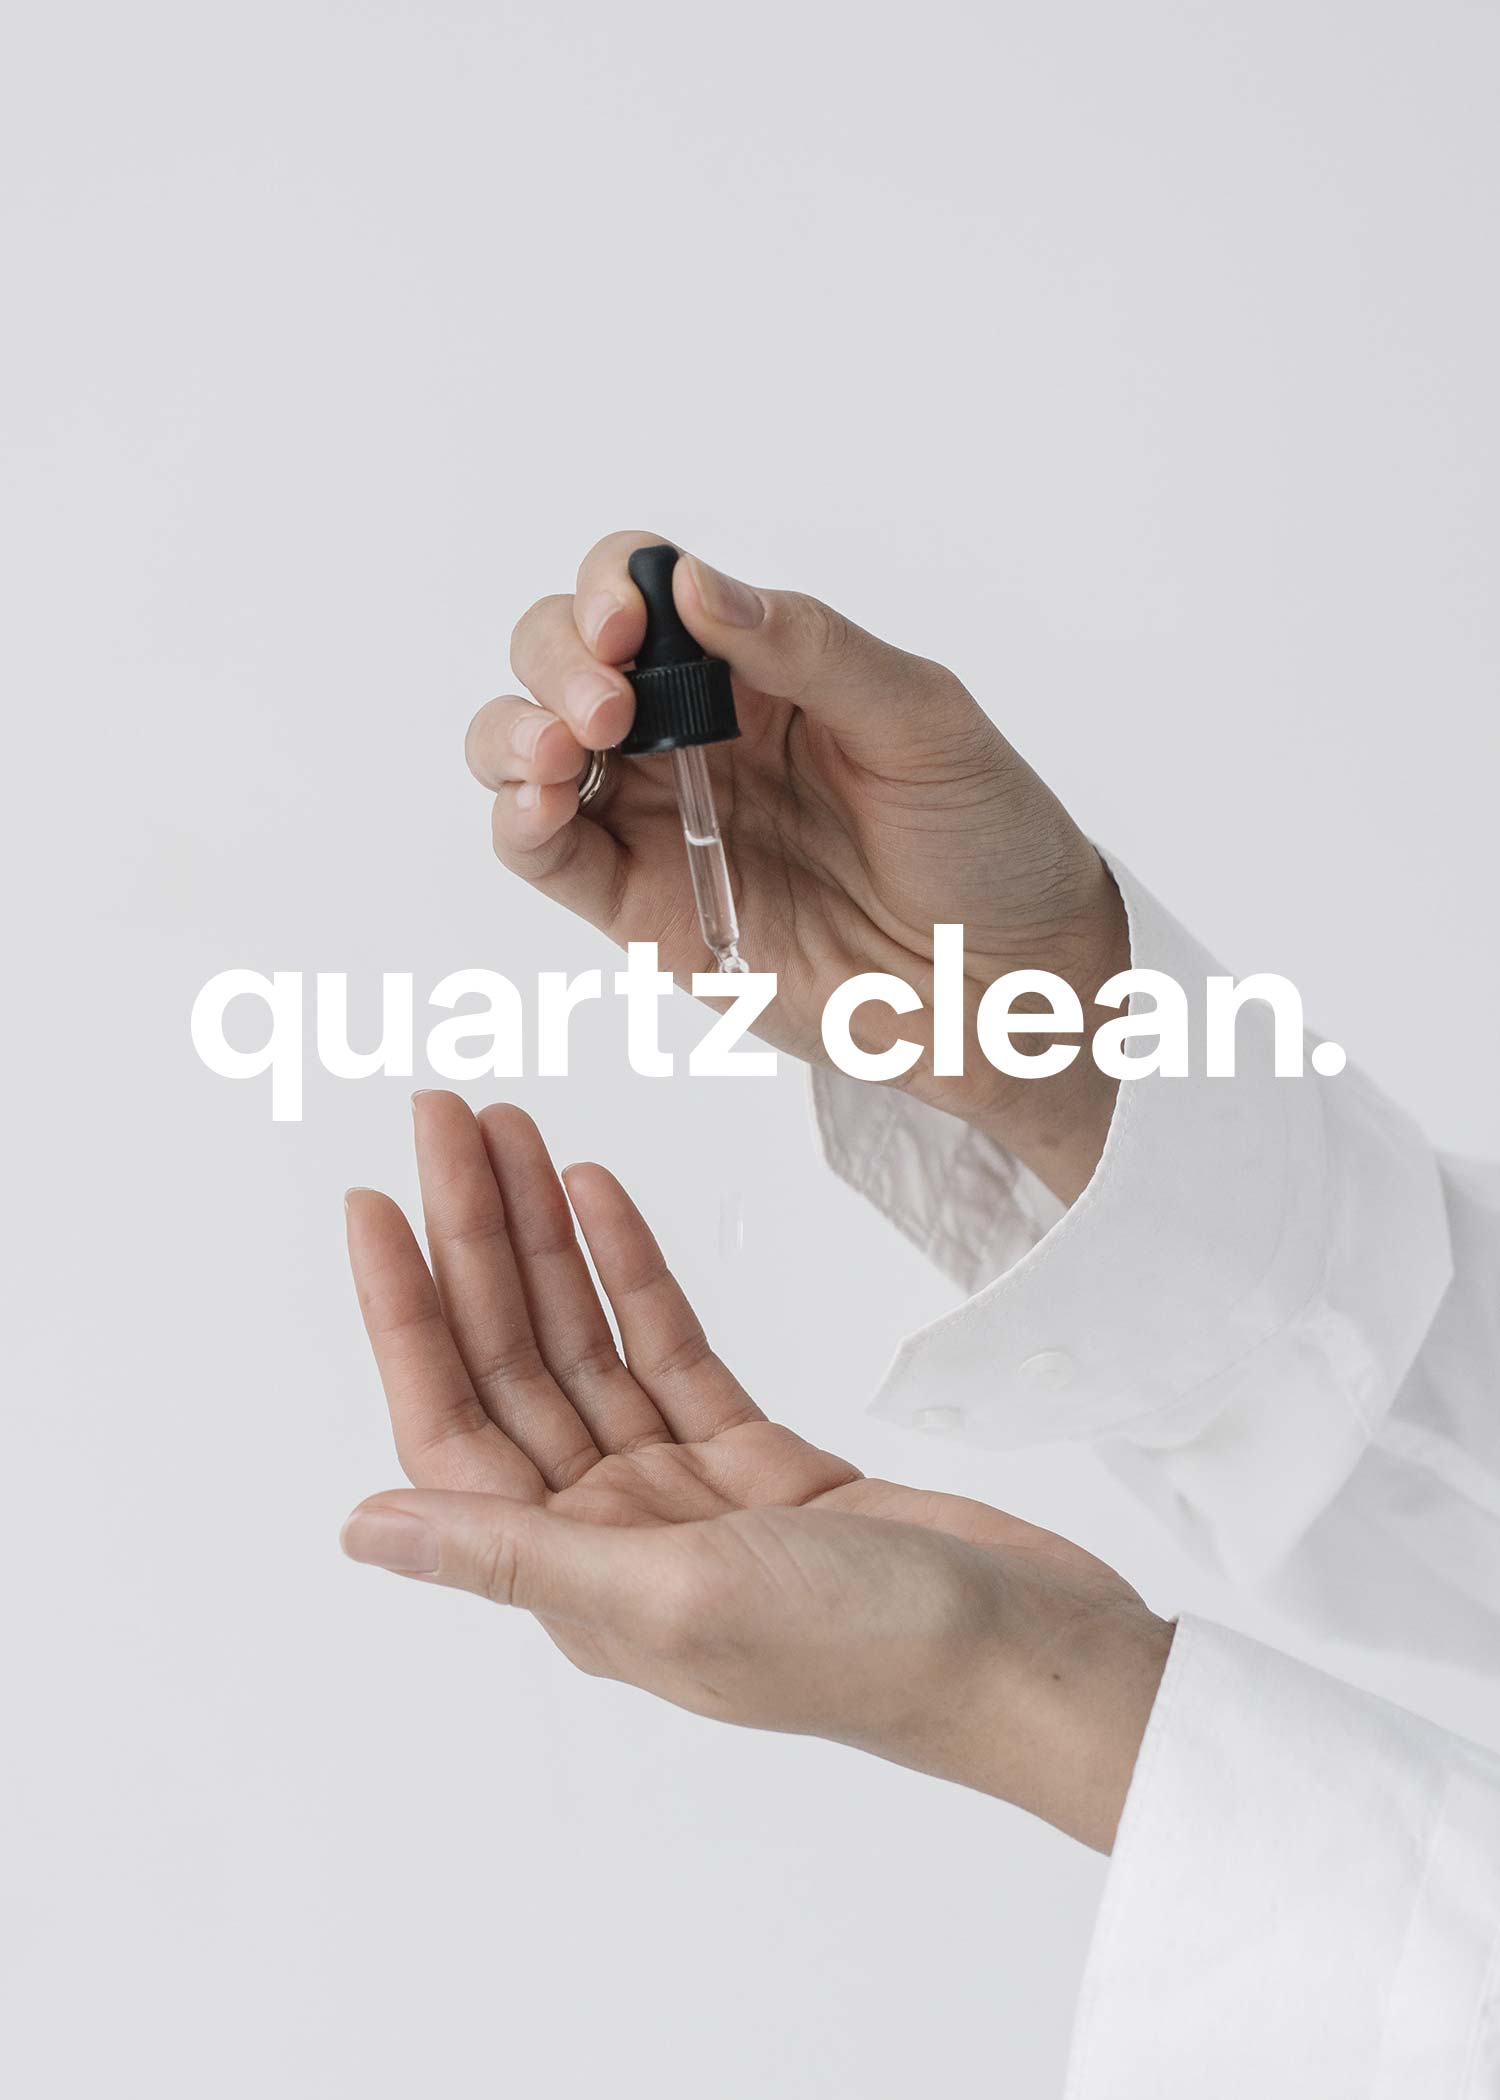 This Is Ikon - Quartz Clean